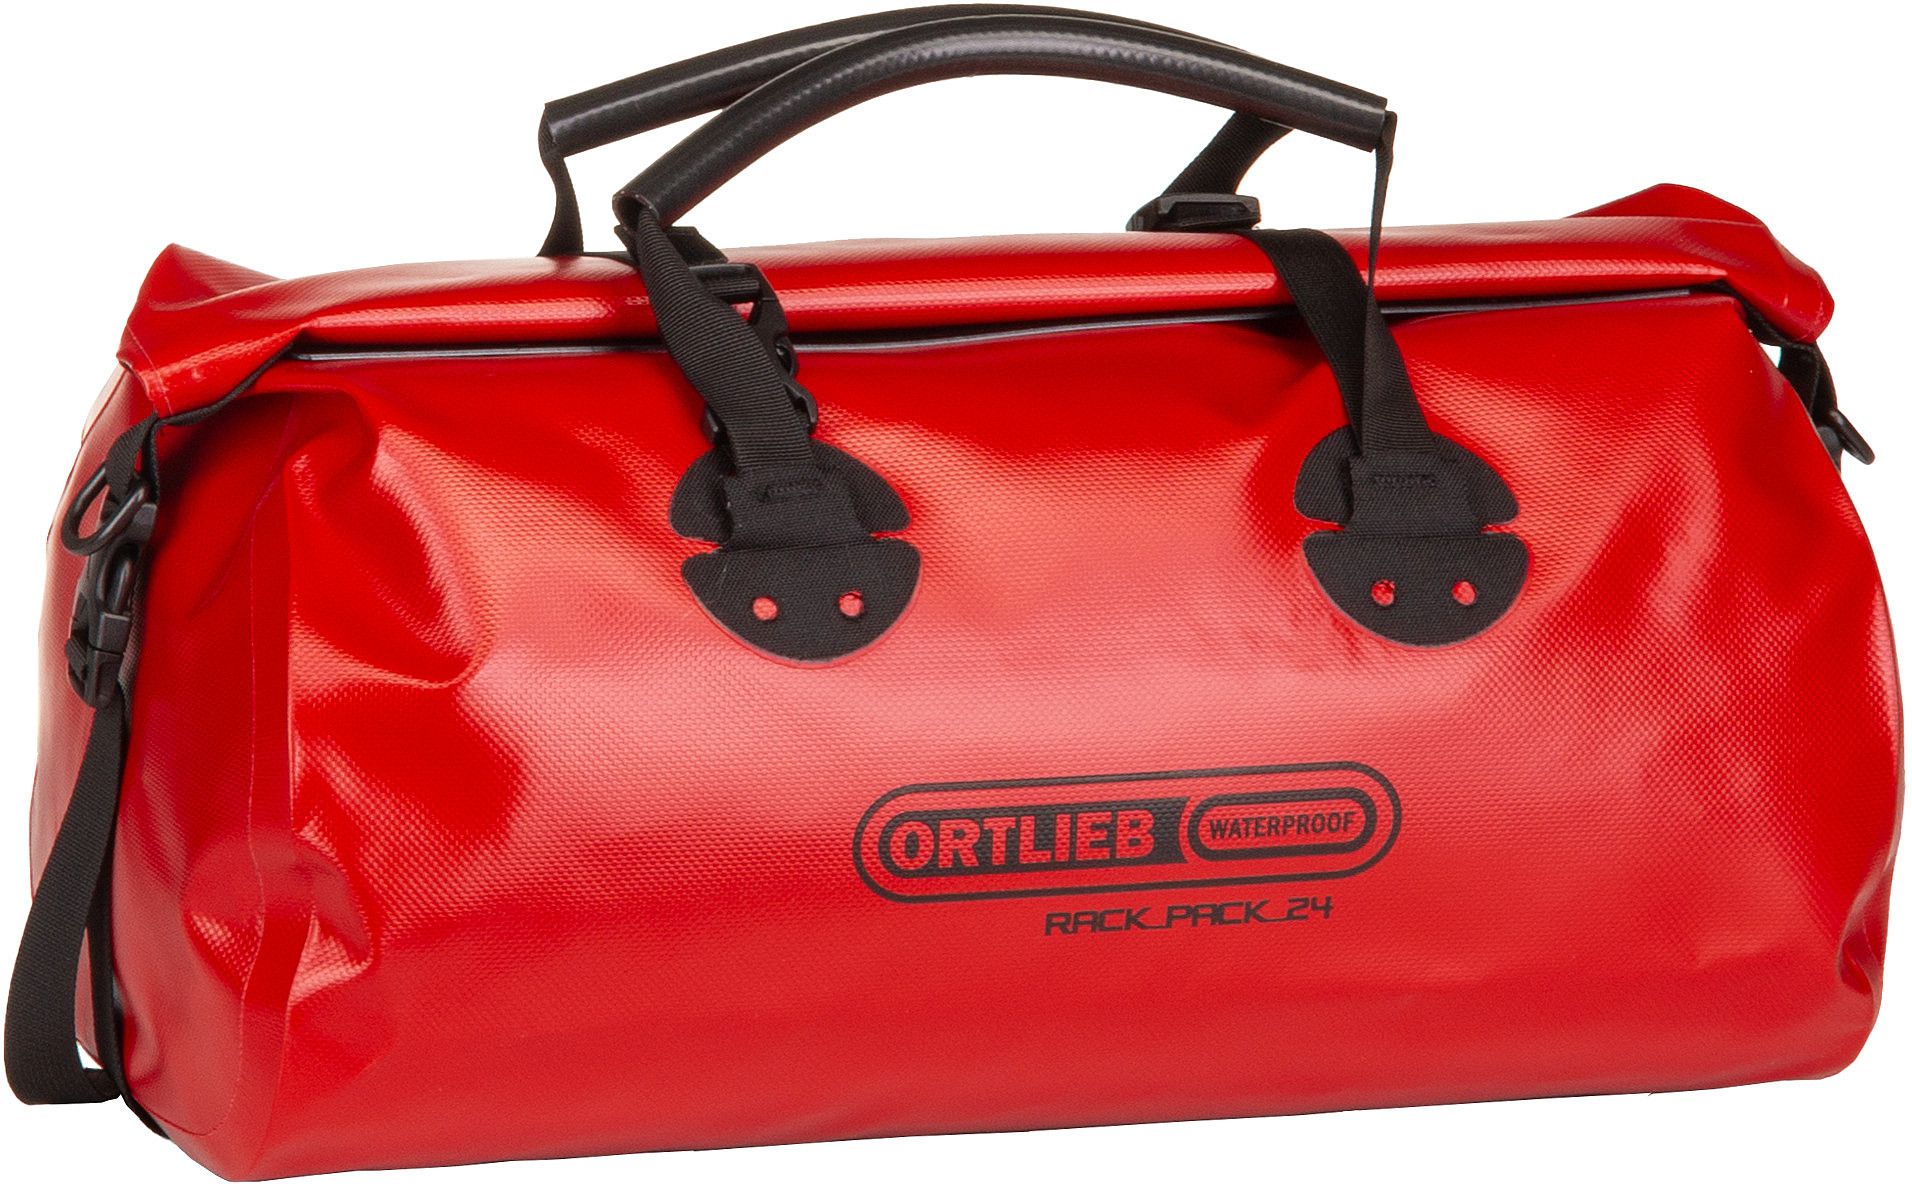 ORTLIEB Rack-Pack 24L  in Rot (24 Liter), Reisetasche